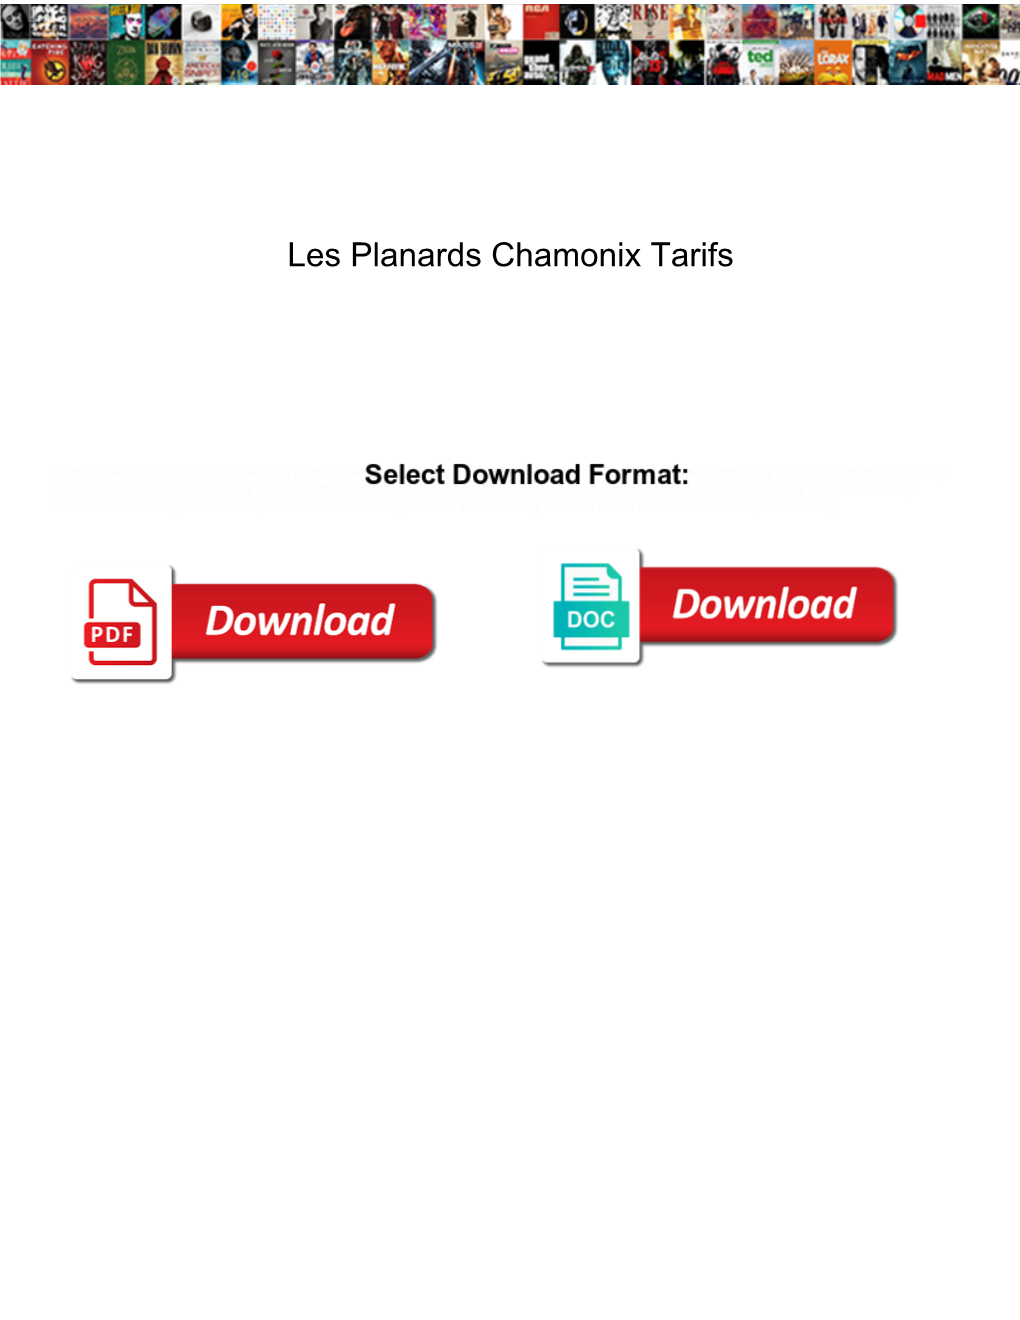 Les Planards Chamonix Tarifs